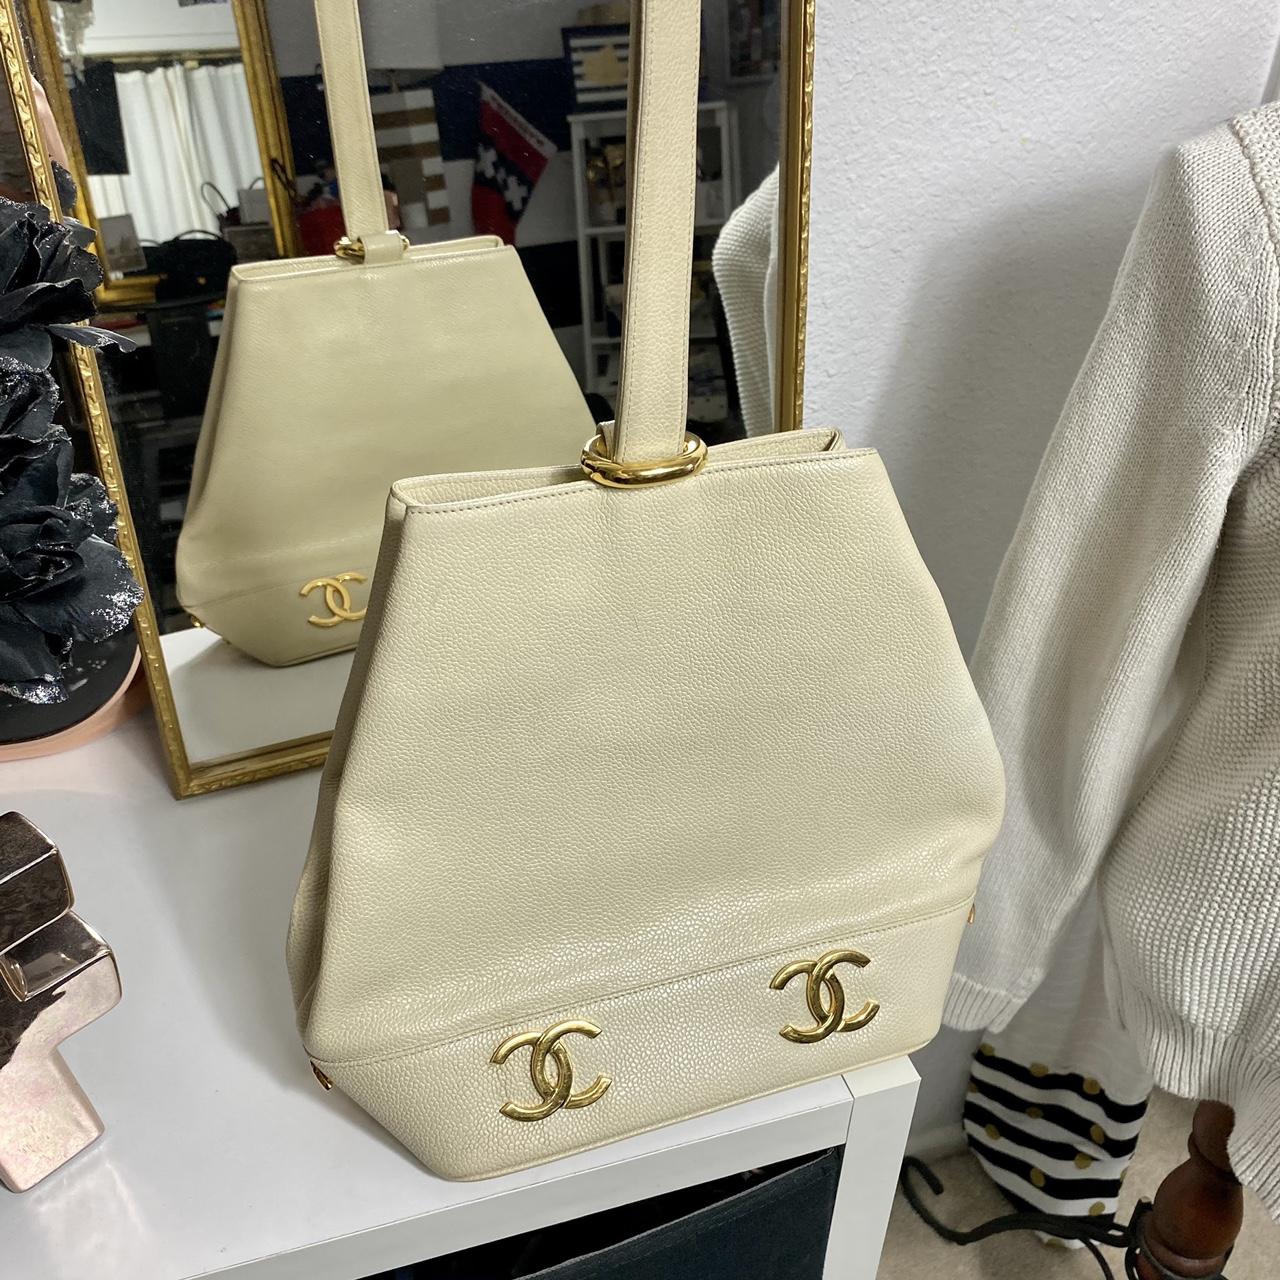 Vintage Chanel Bucket Bag in Cream/Ivory., Brand